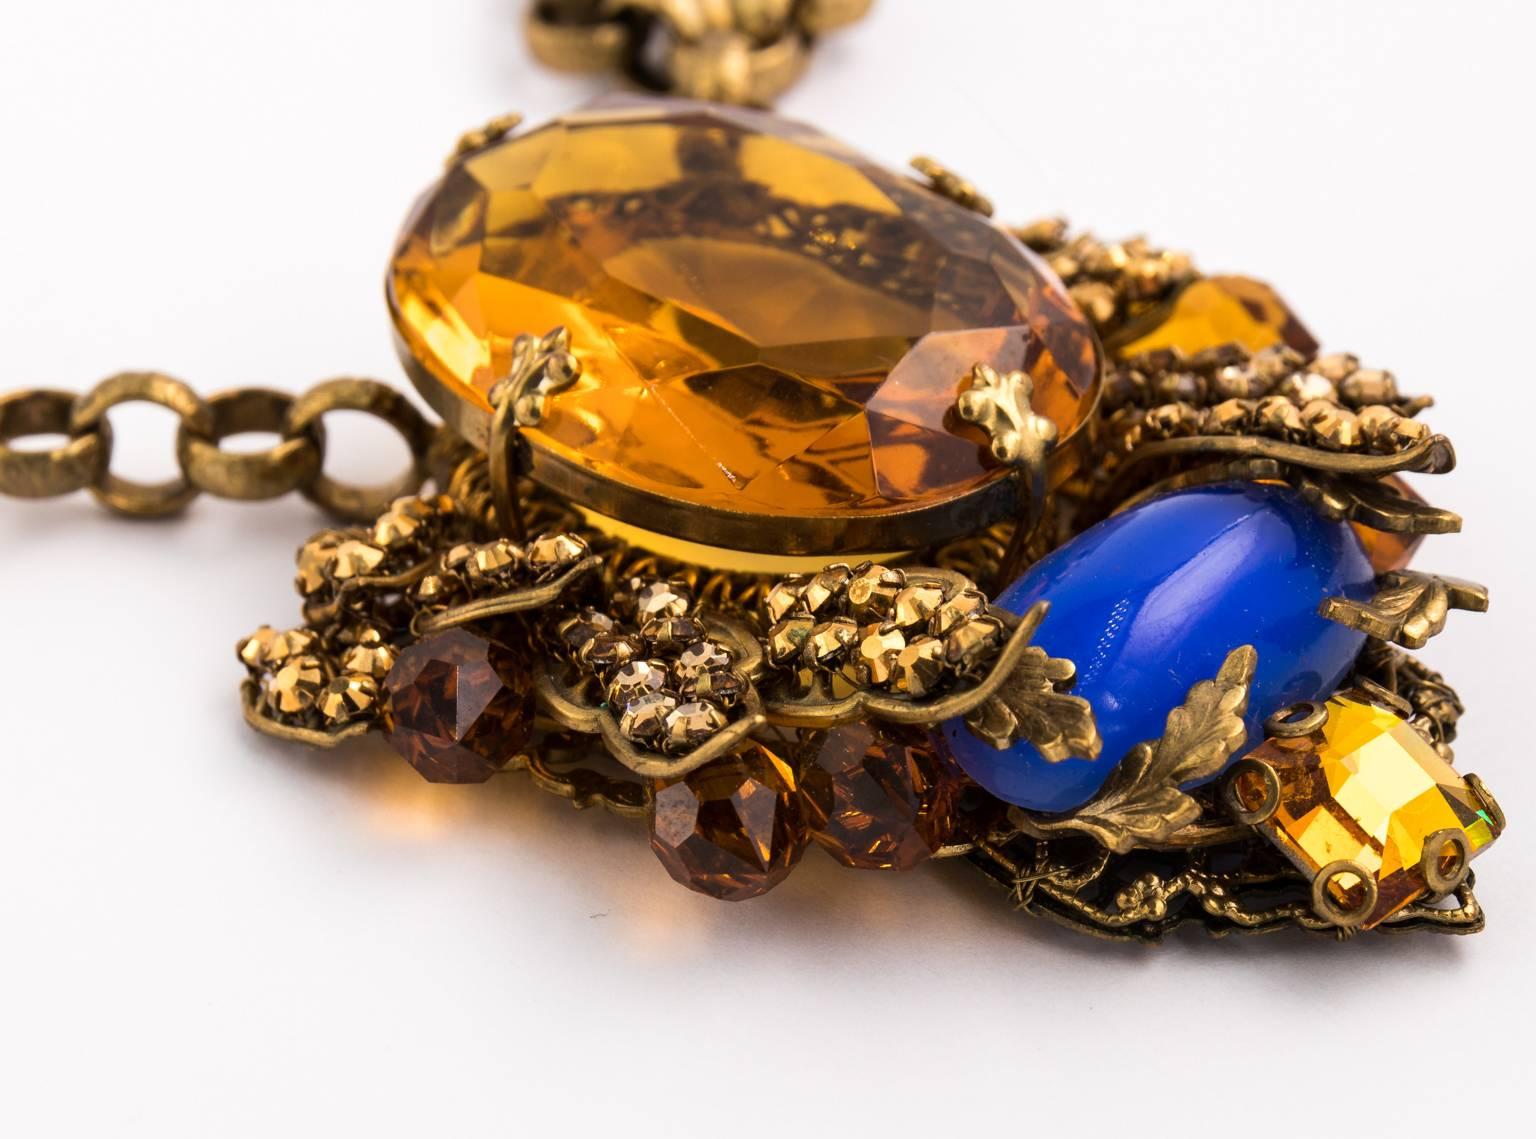 Bijoux Heart Necklace with Large Citrine Glass Centre Piece by Dita Von Teese 11